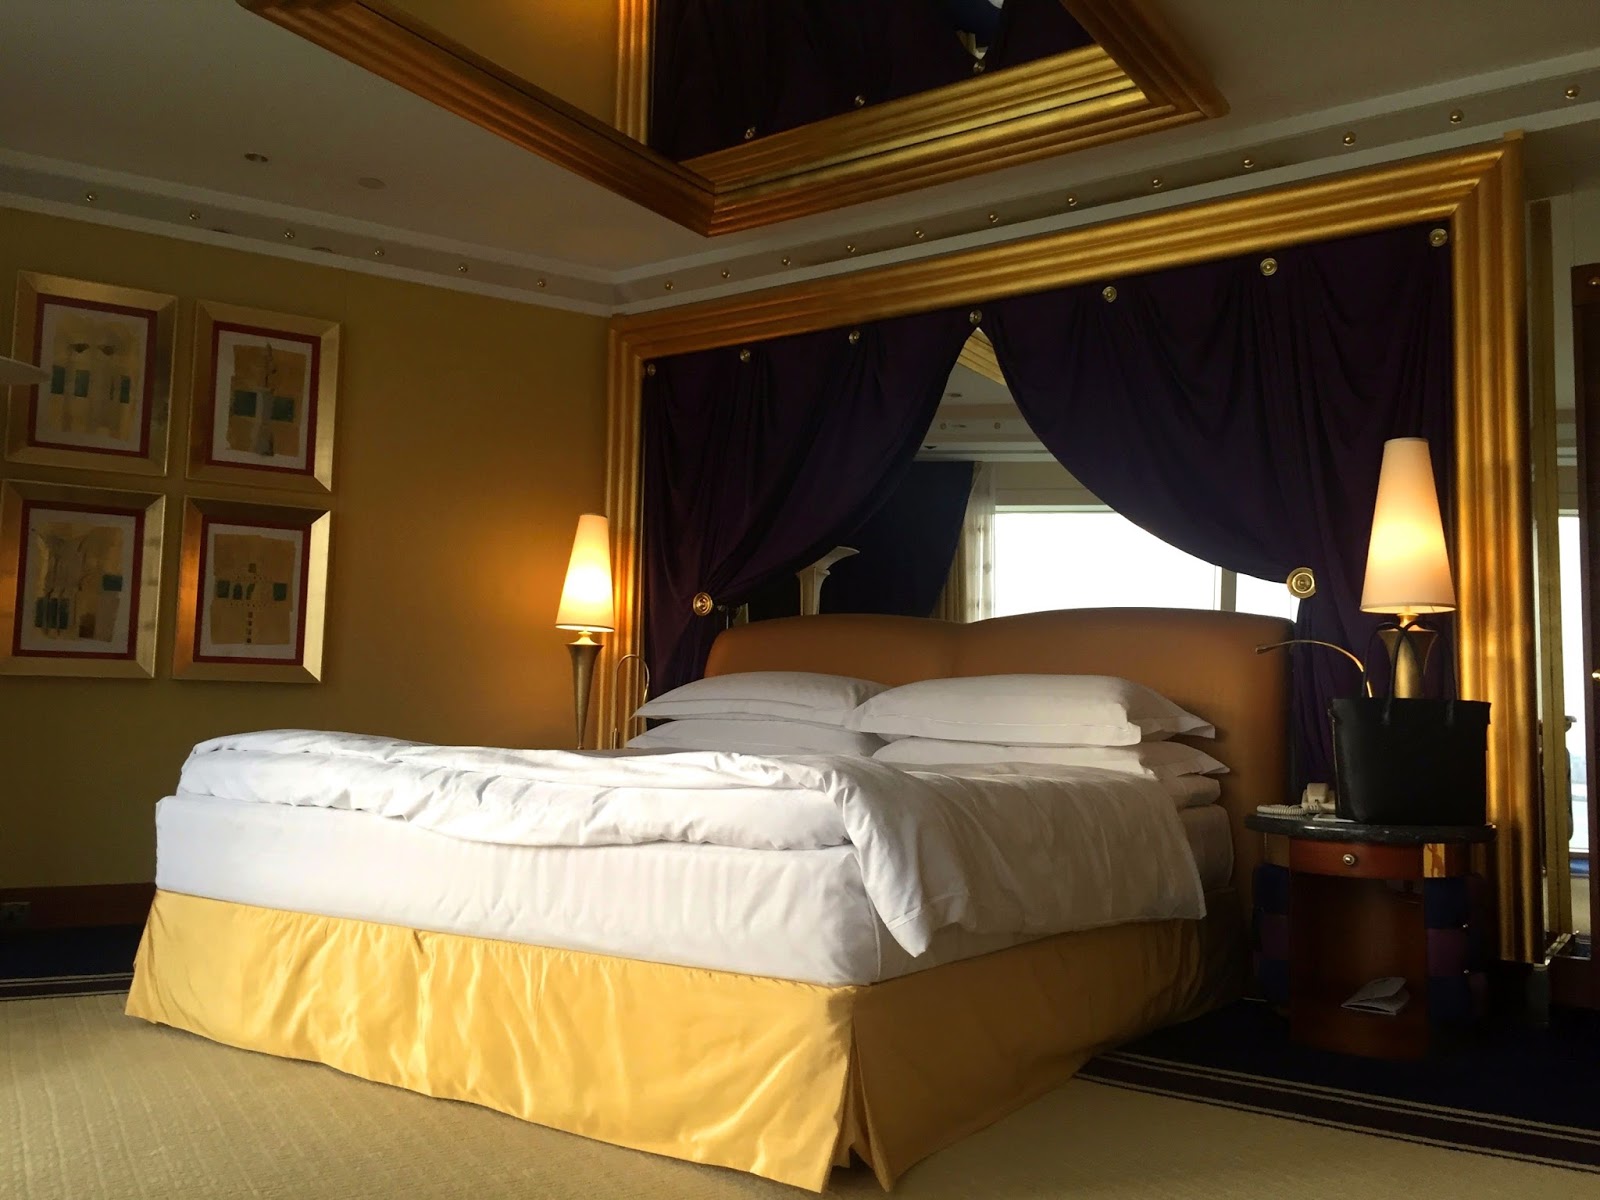 Burj Al Arab Review - Luxury Suite - Vegan Dubai Travel